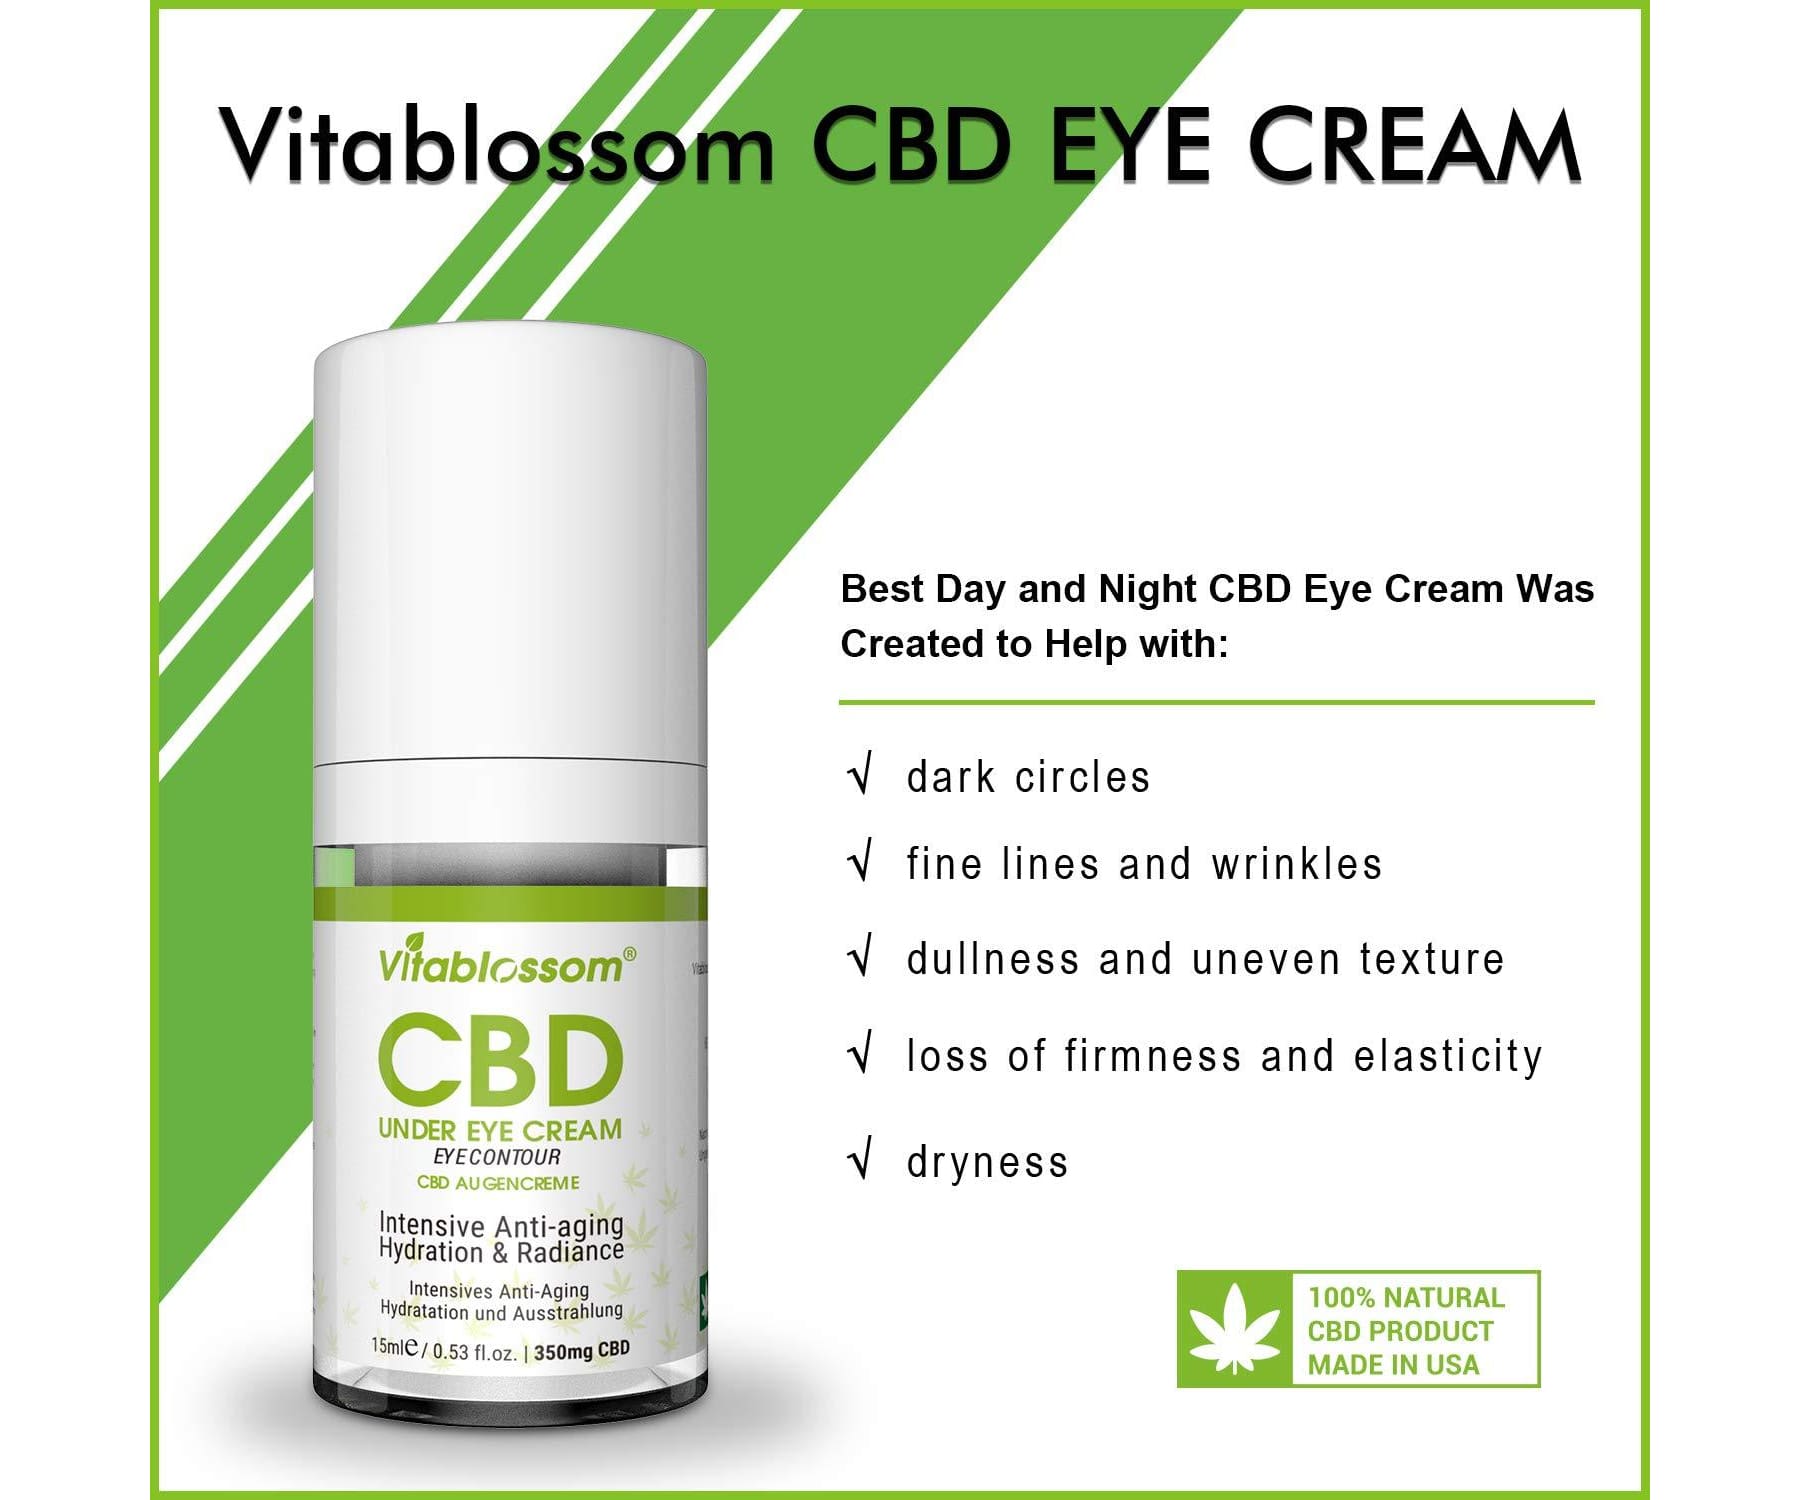 Marke: Vitablossom - Vitablossm Augenkontur-Creme mit Hanf als Anti-Aging